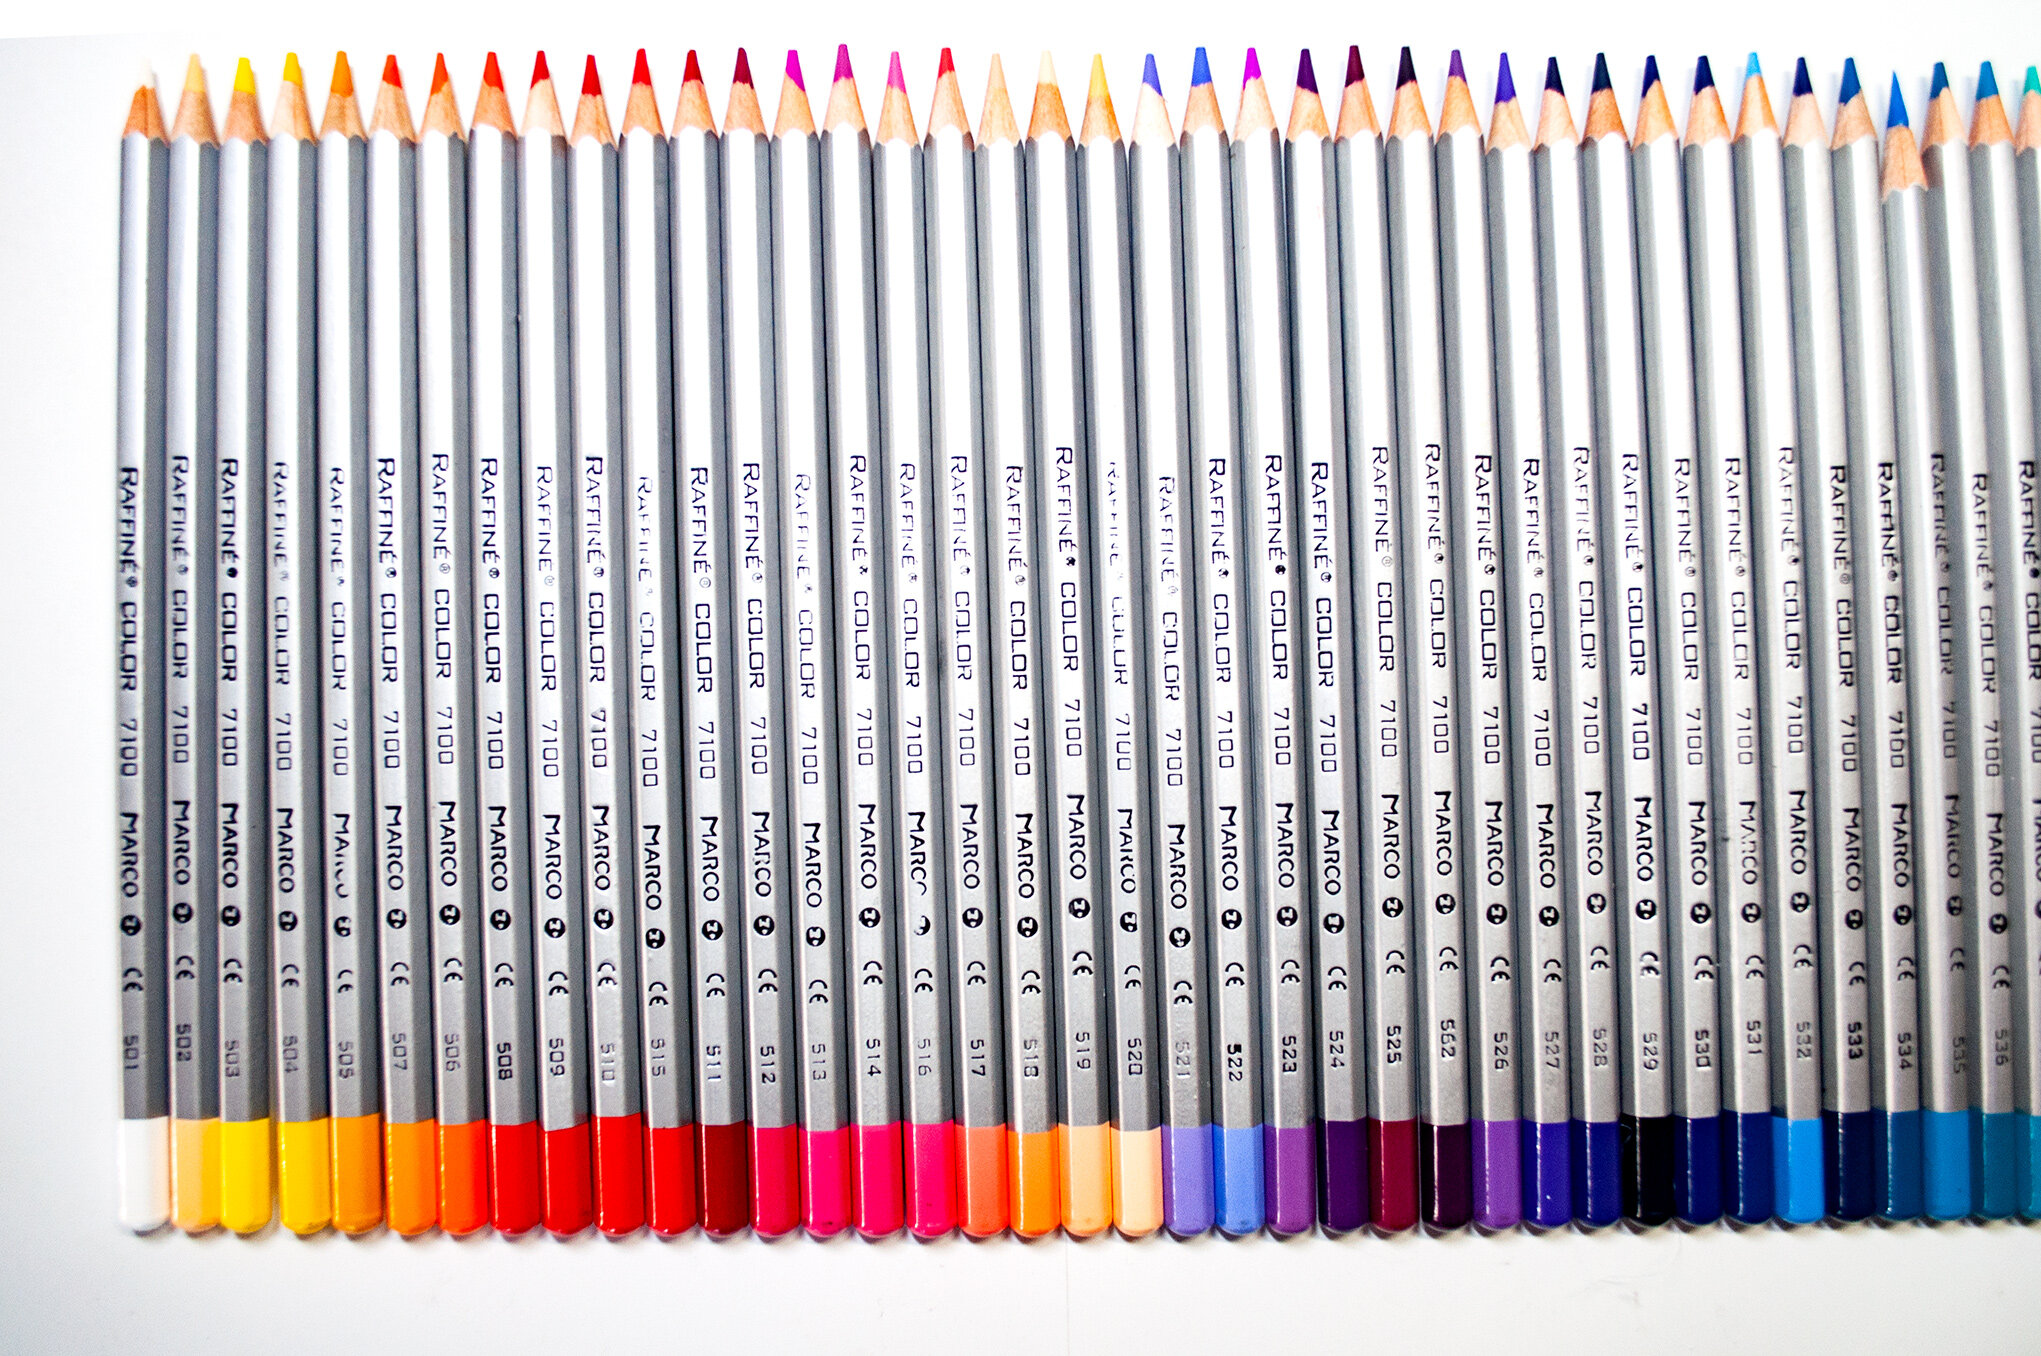 Rob's Art Supply Reviews: Raffine Pro Artist Colored Pencils Set